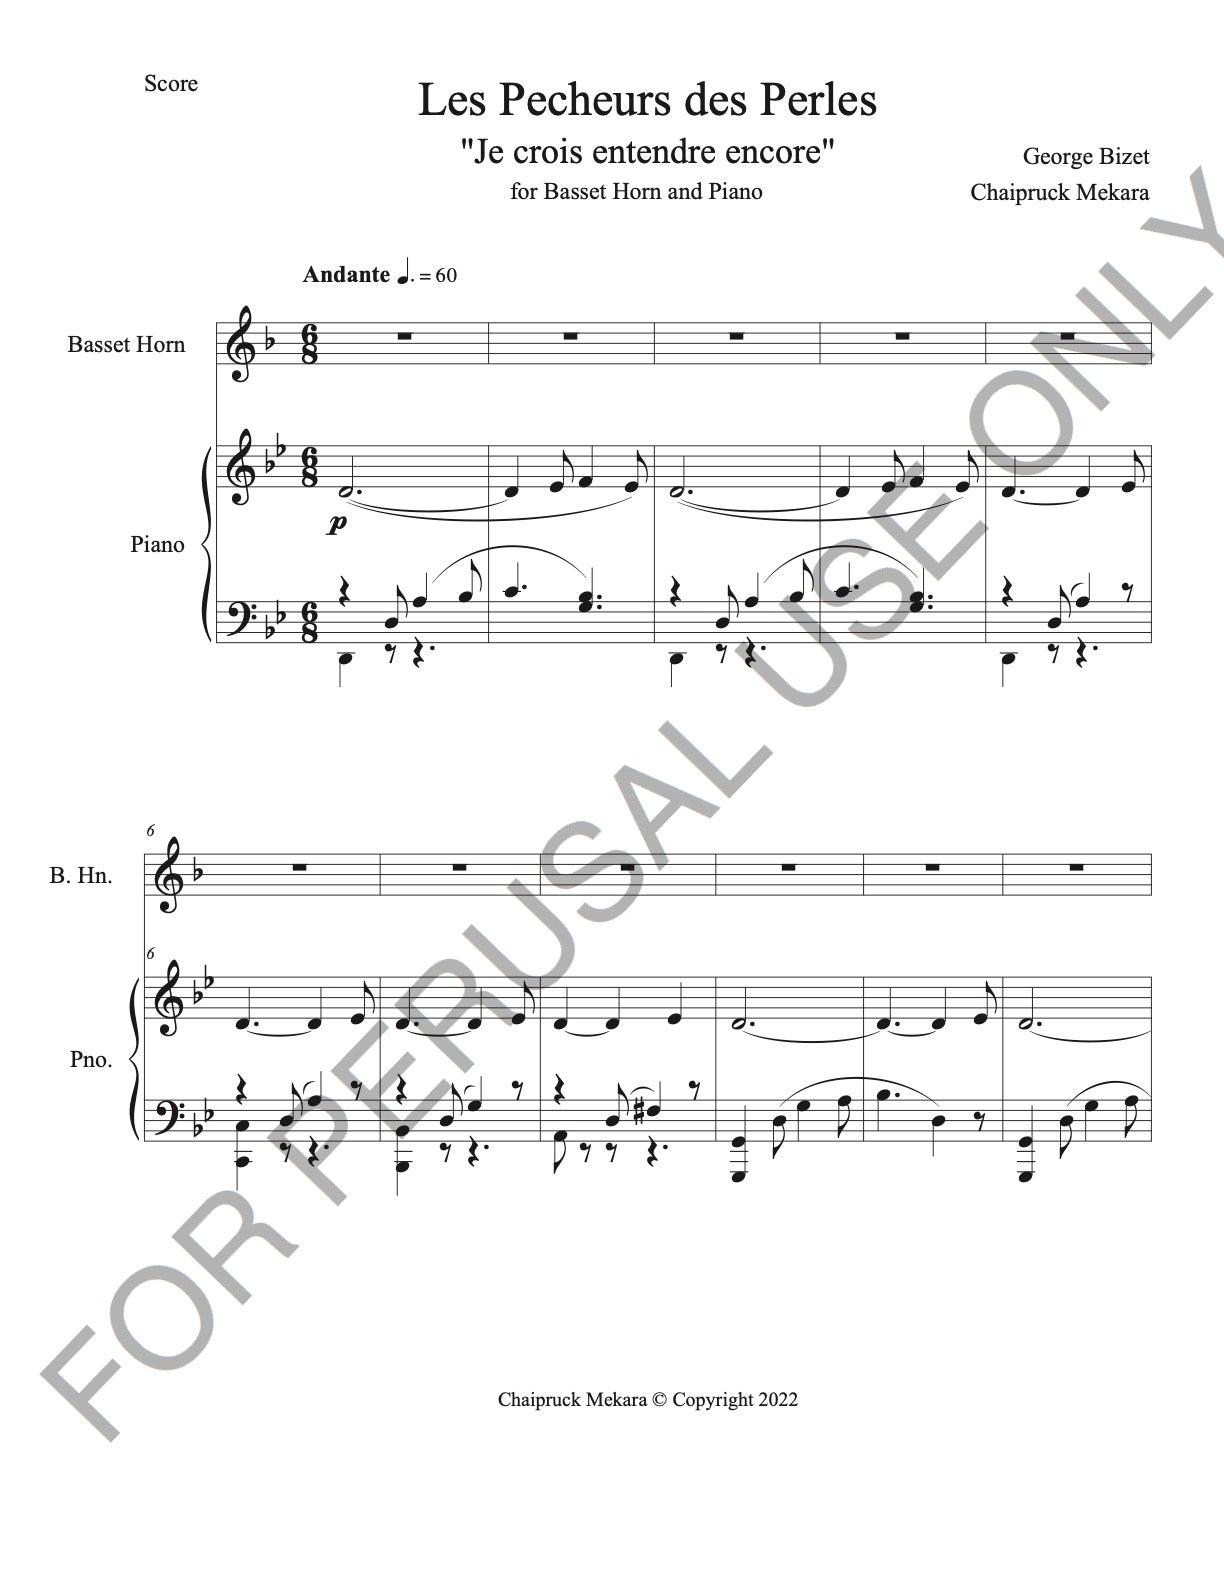 Basset Horn and Piano sheet music: Je crois entendre encore from Les Pecheurs de Perles - ChaipruckMekara